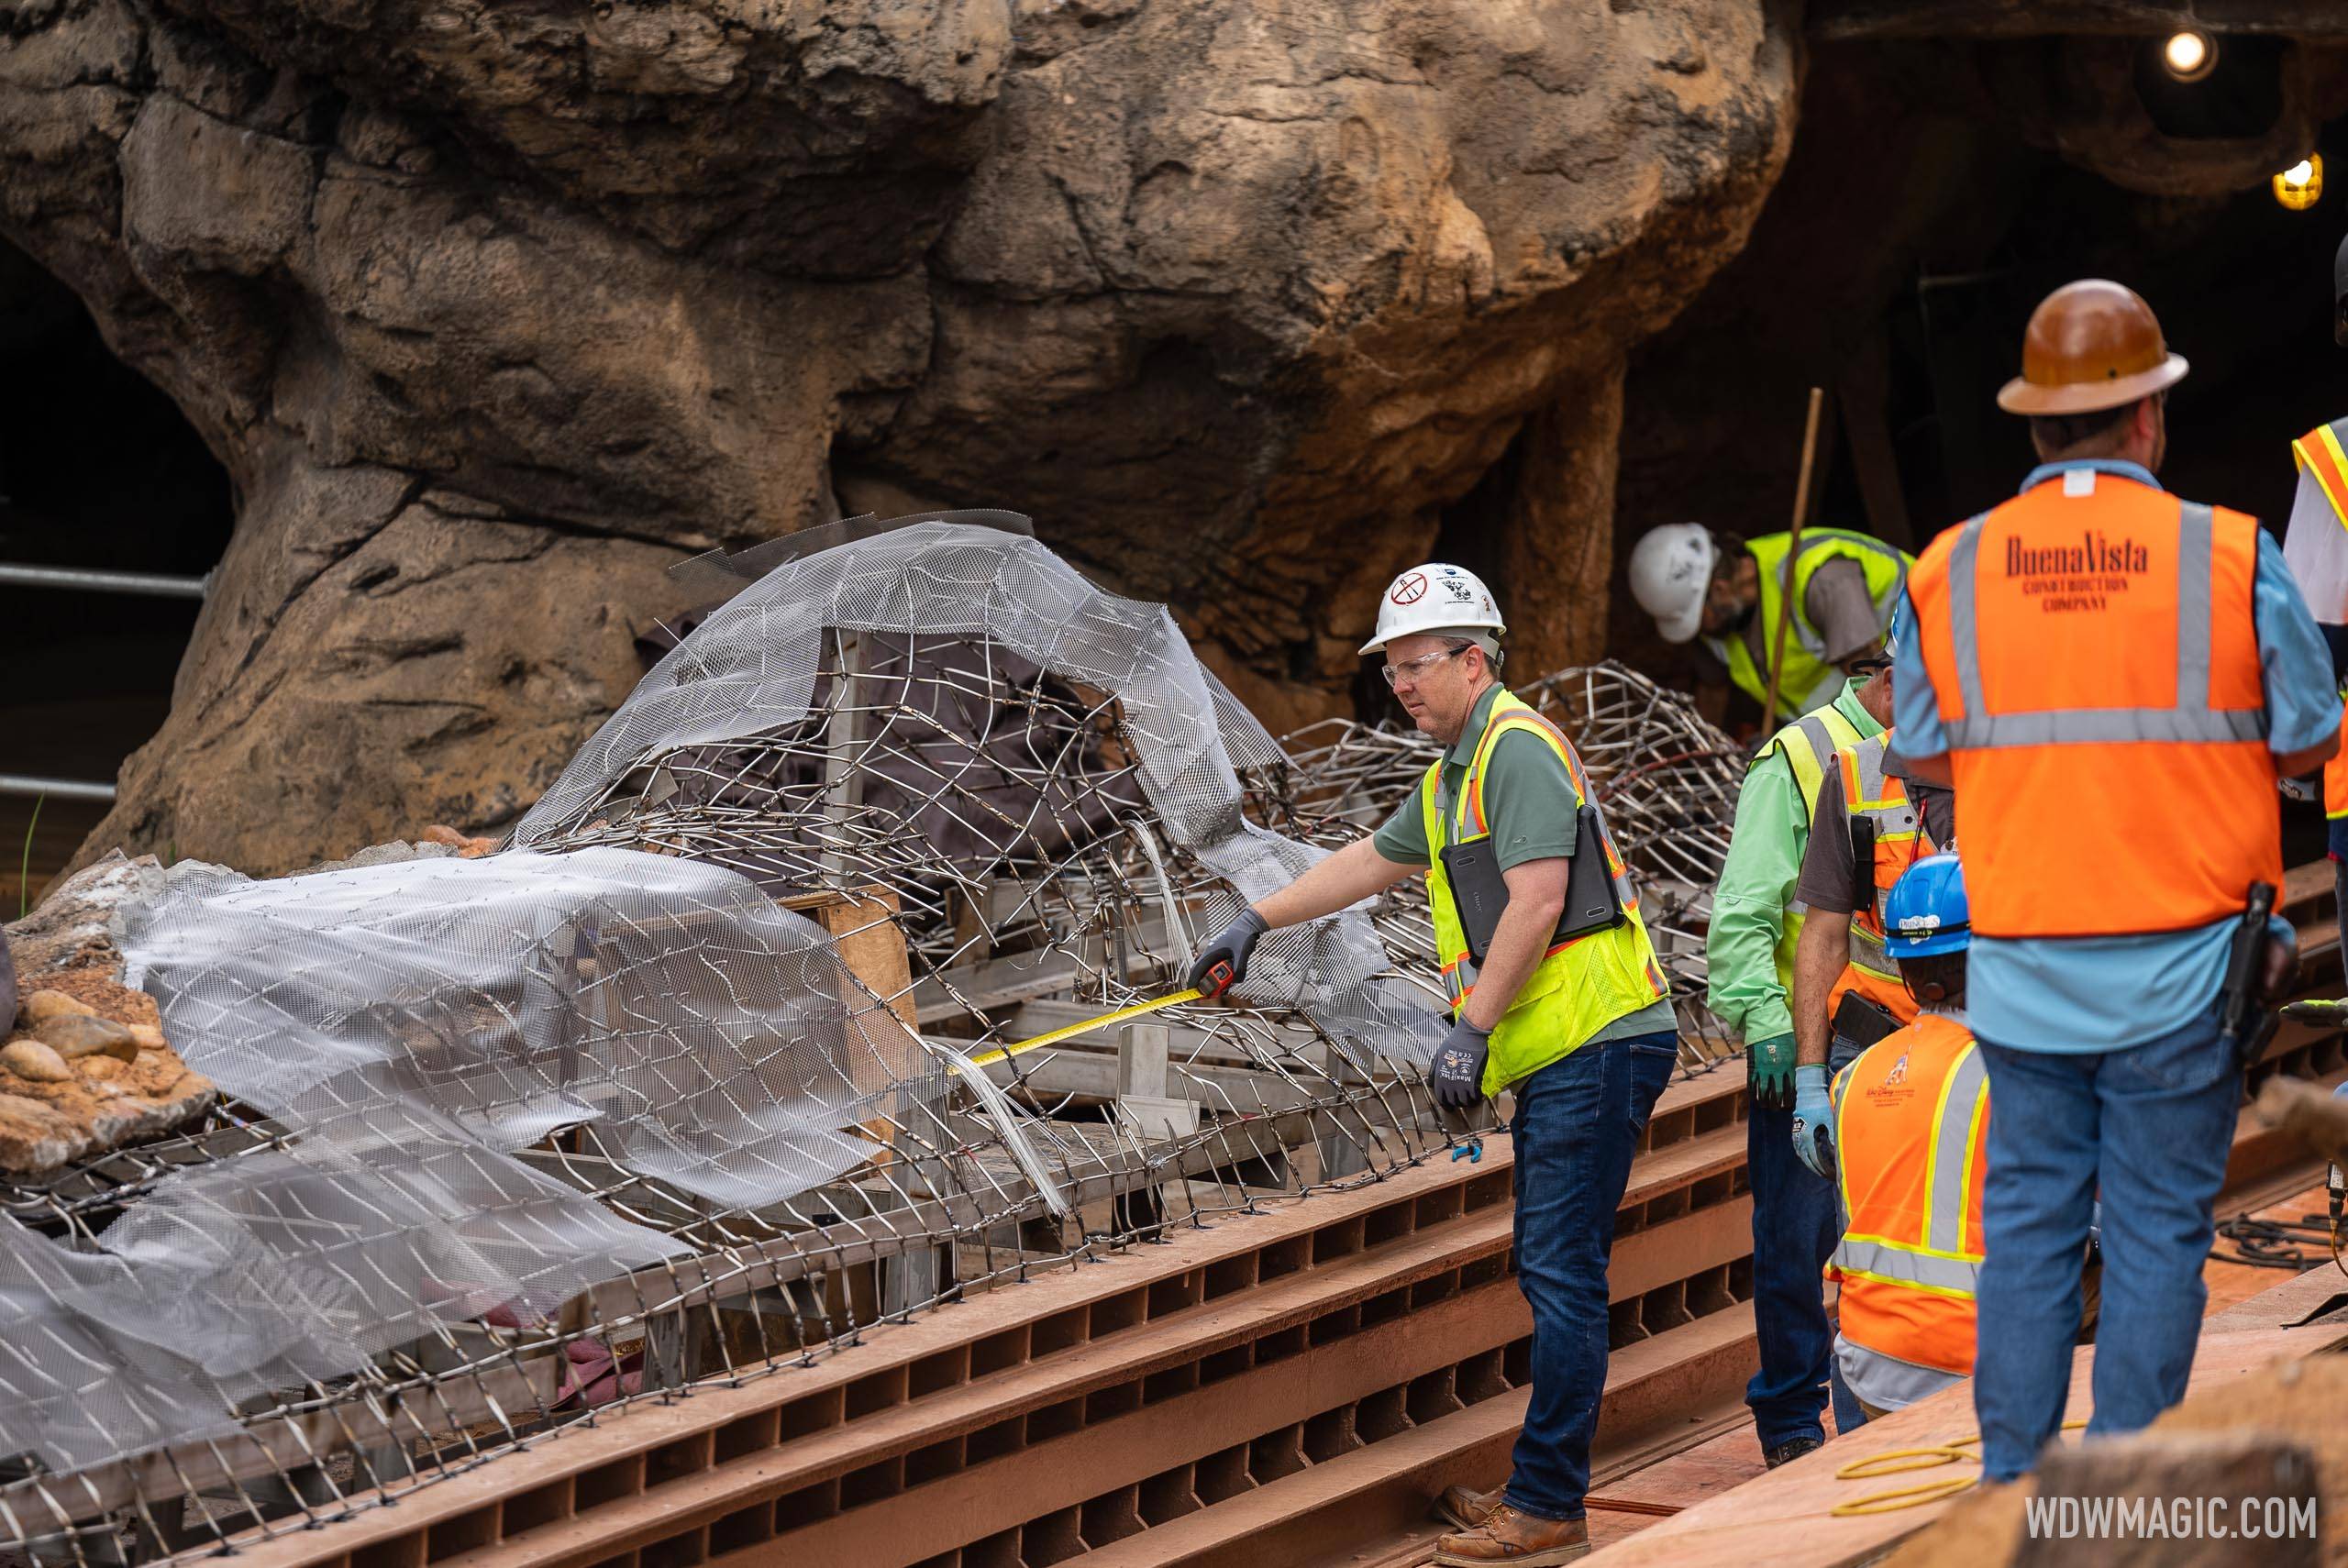 Latest look at Tiana's Bayou Adventure construction at Walt Disney World's Magic Kingdom